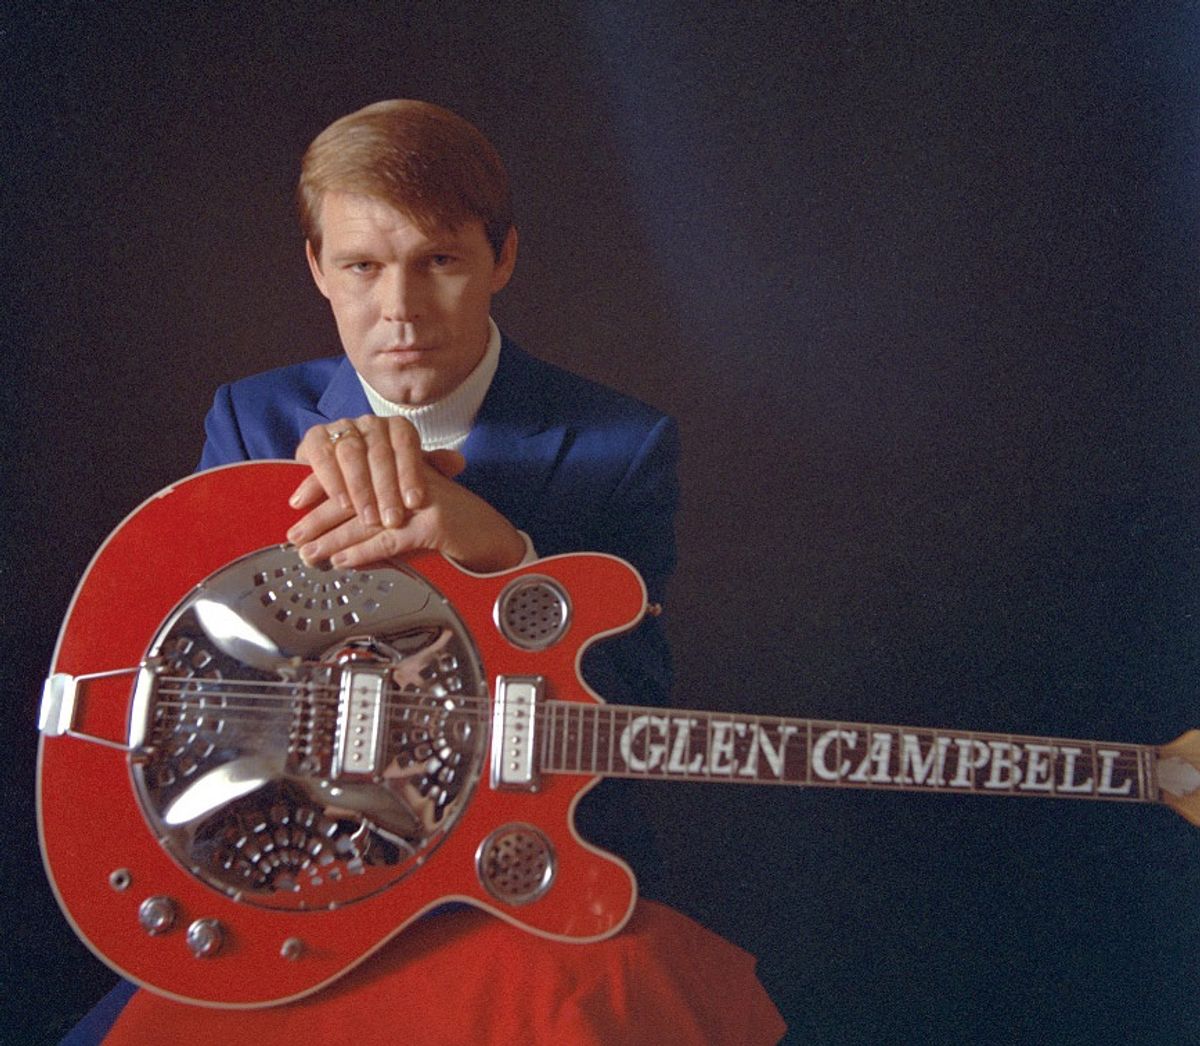 Glen Campbell: 1936–2017